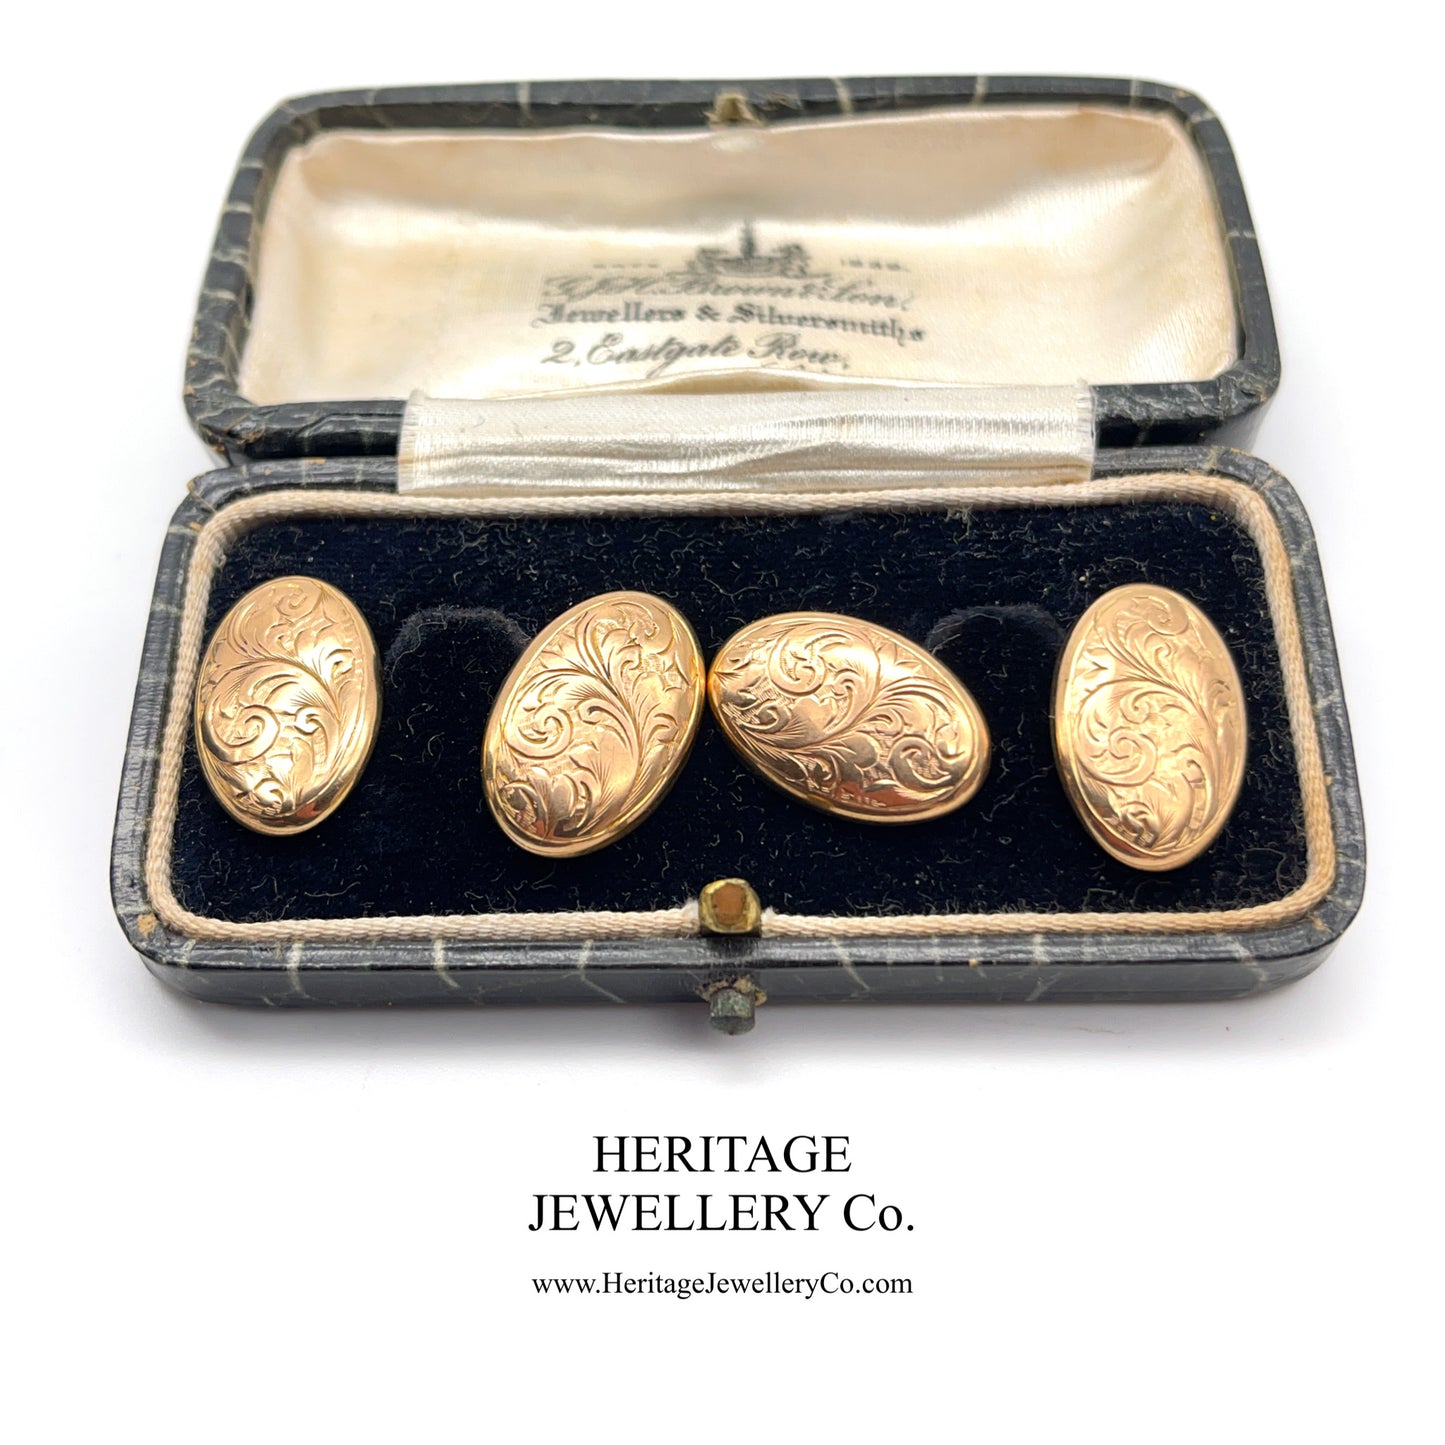 Edwardian Gold Cufflinks with Antique Box